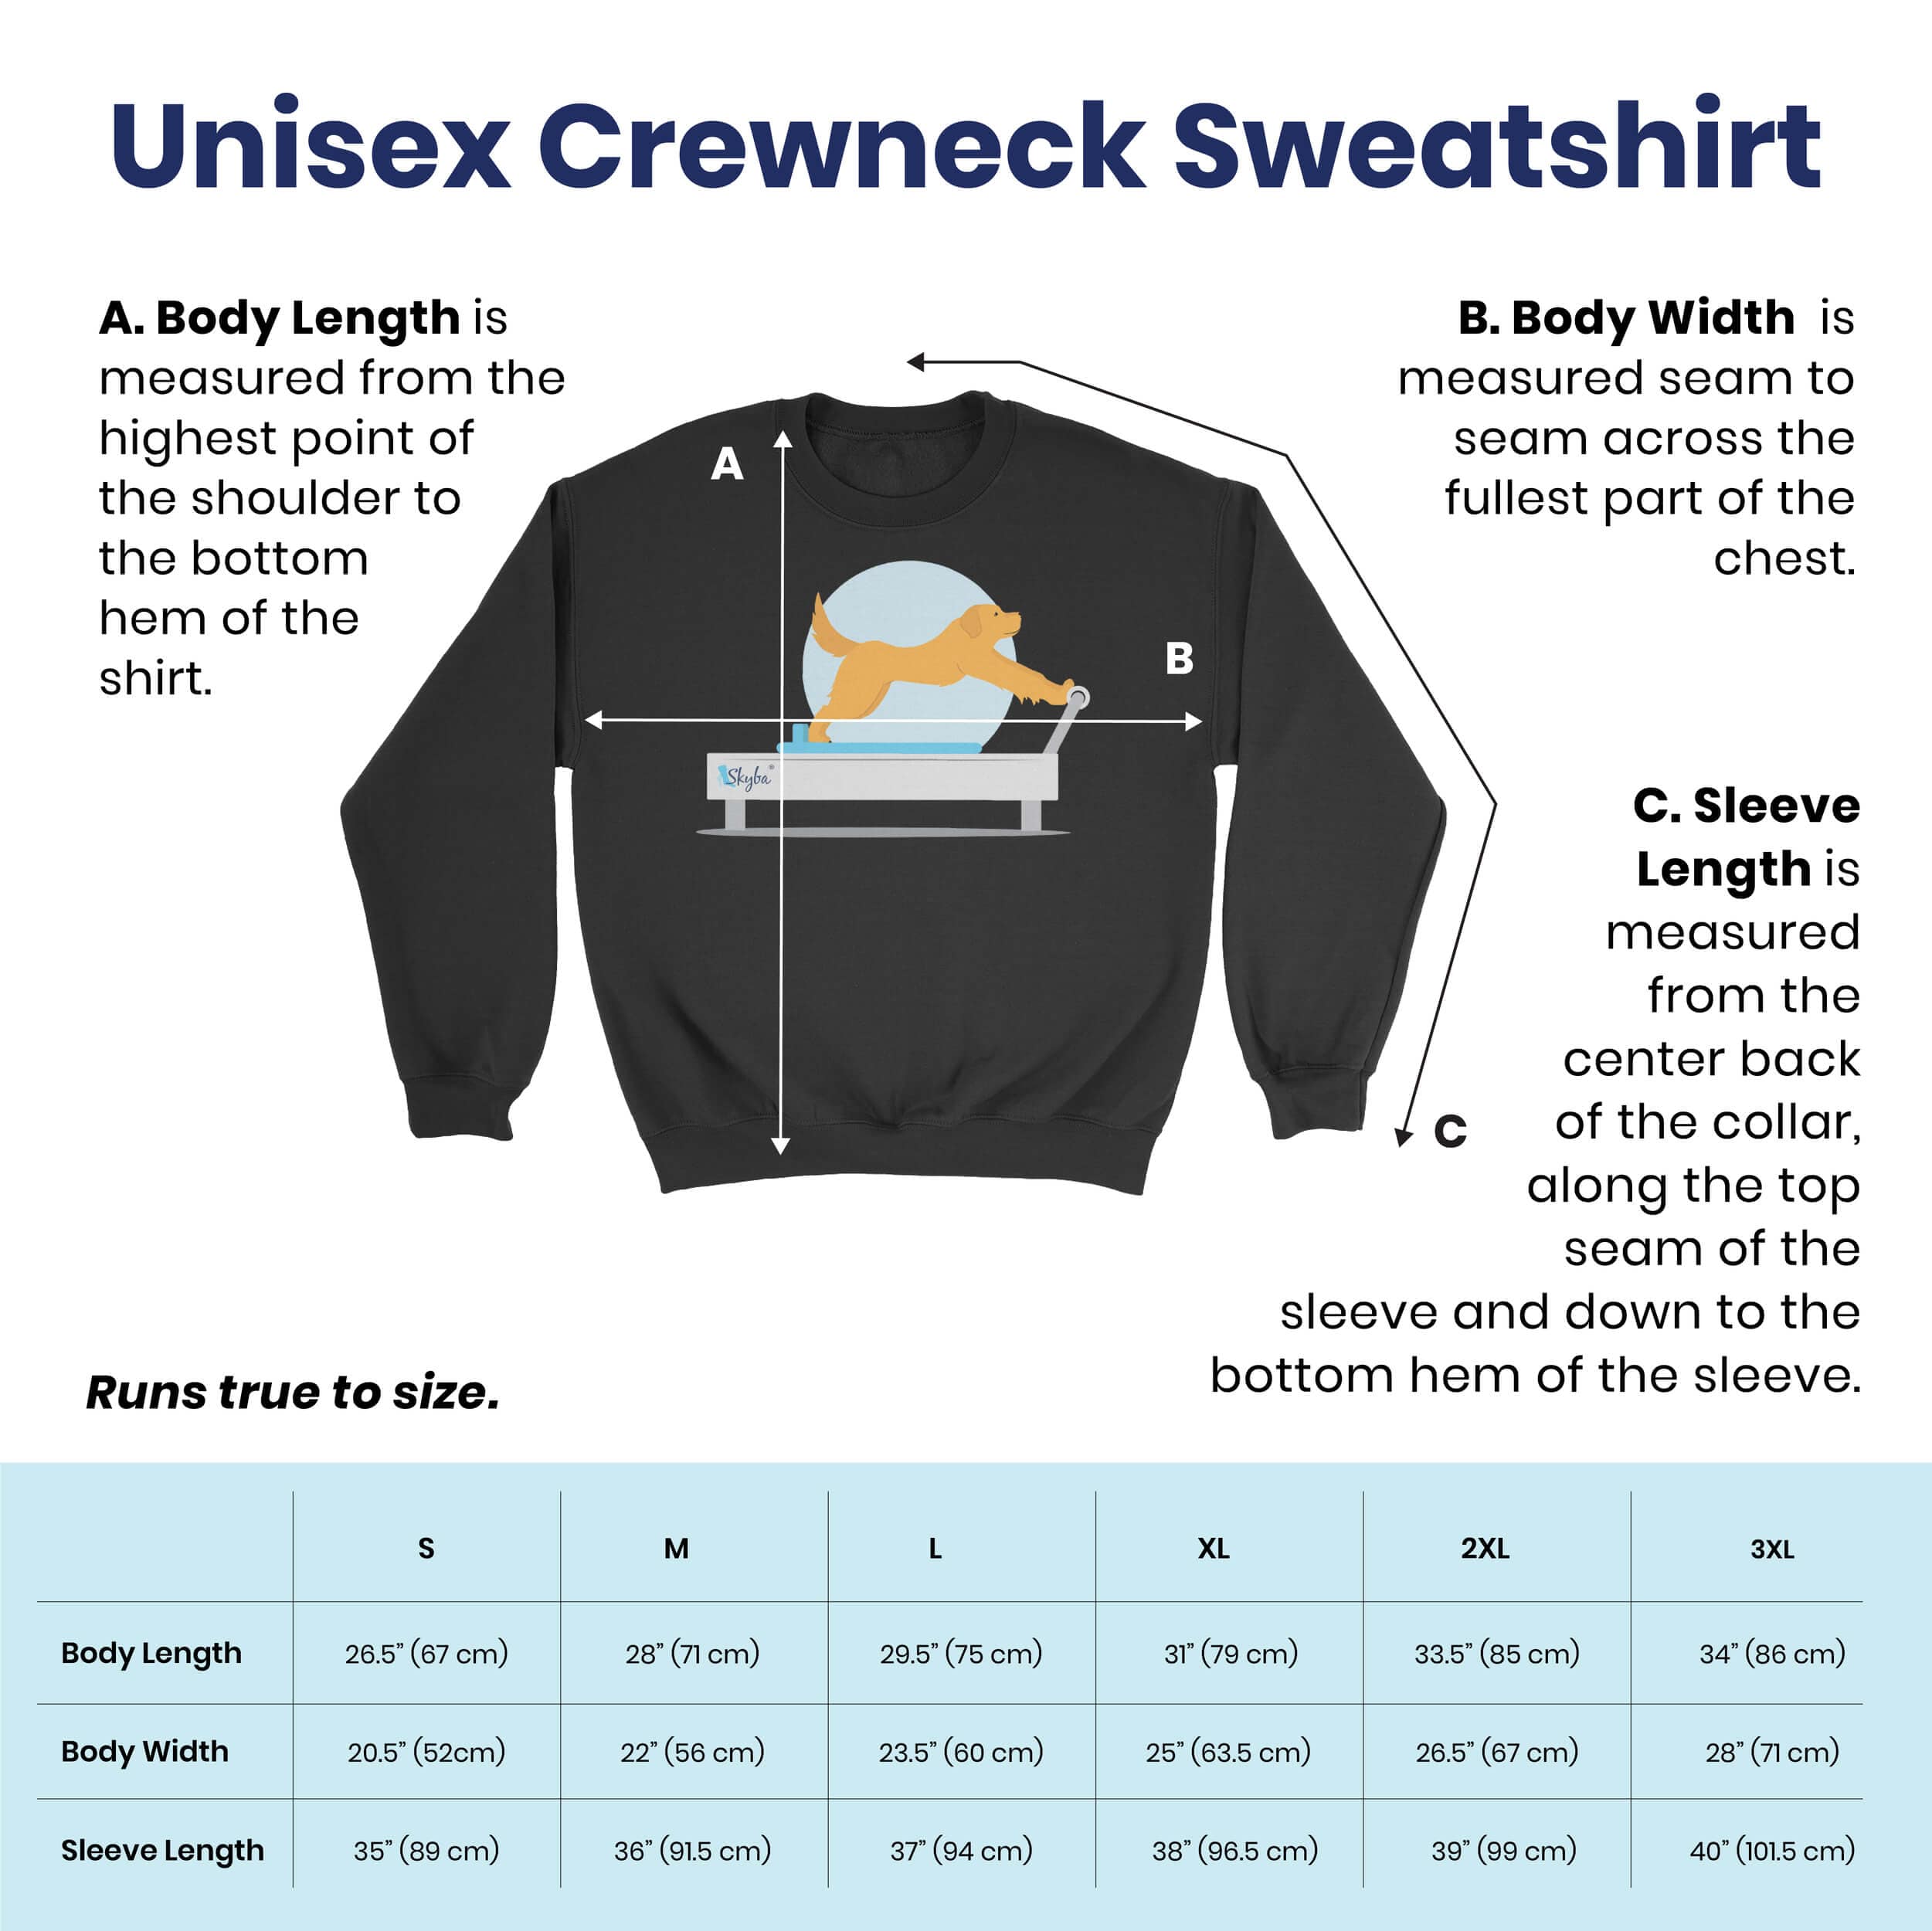 Panda Magic Circle - Cozy Crewneck Sweatshirt Skyba Sweatshirt